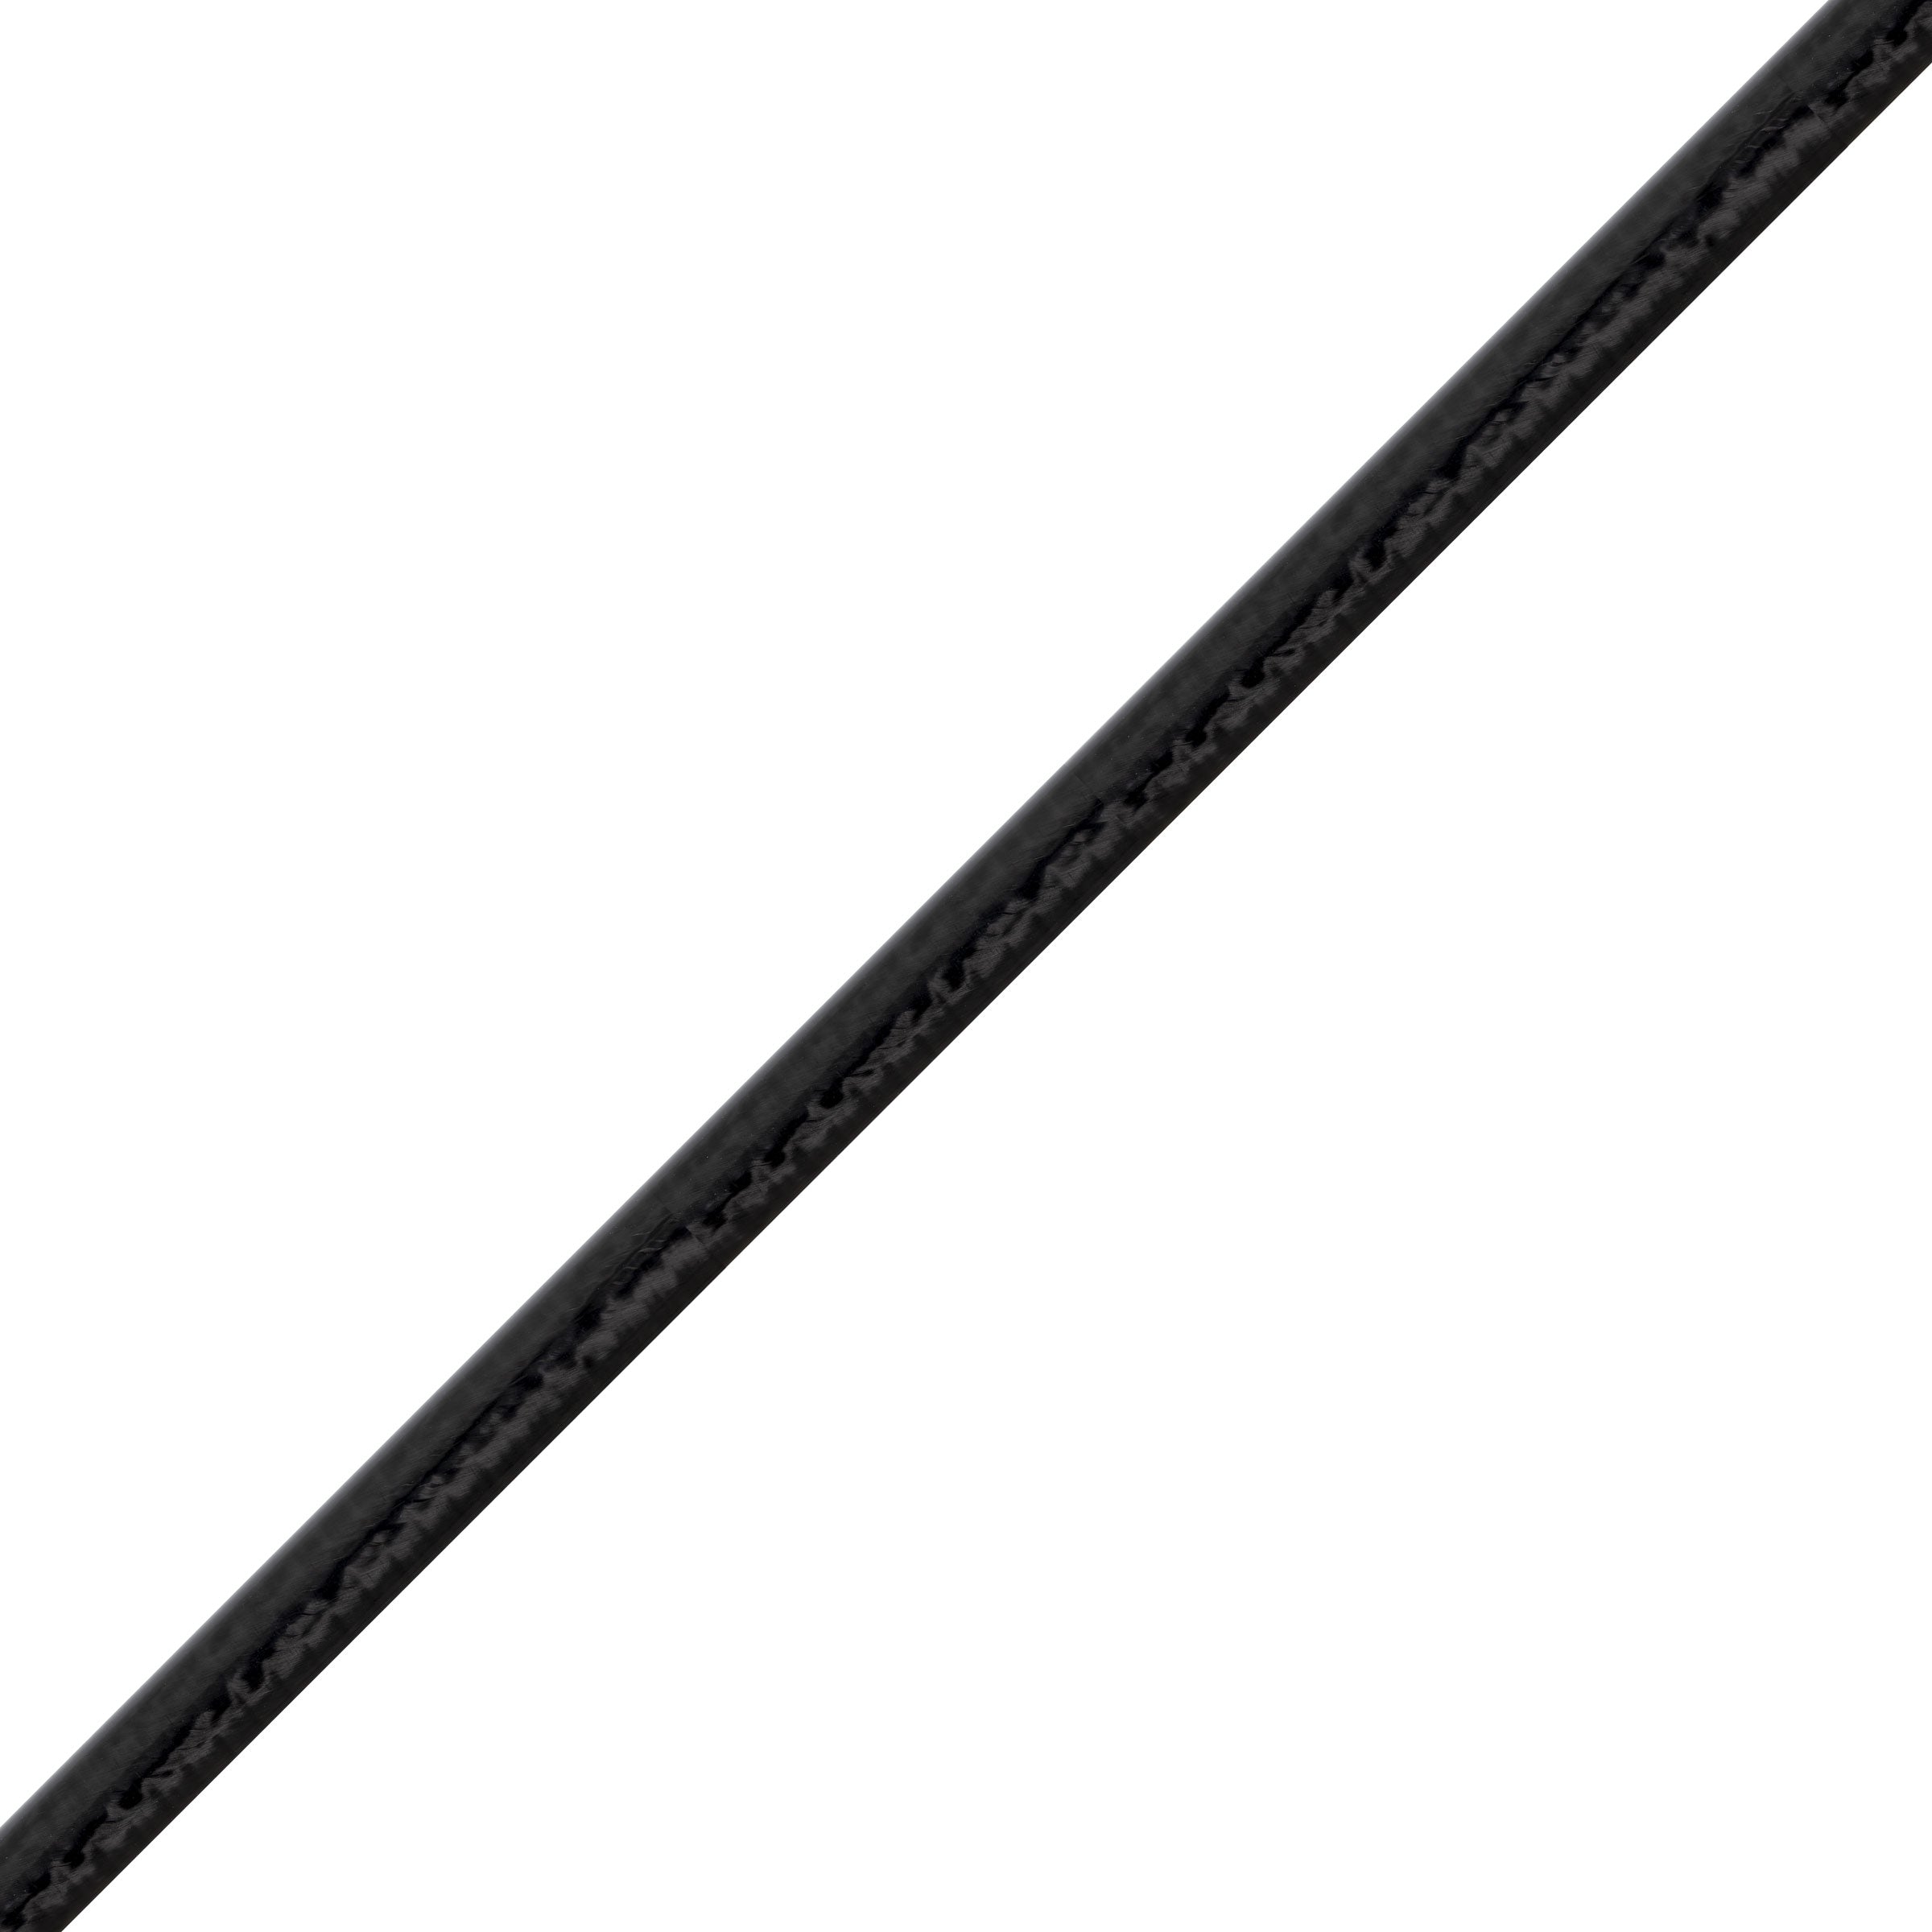 Titan Long Fall / Stick Bait Rod Blank 7'10" Med-Light - TJX-L710ML-B